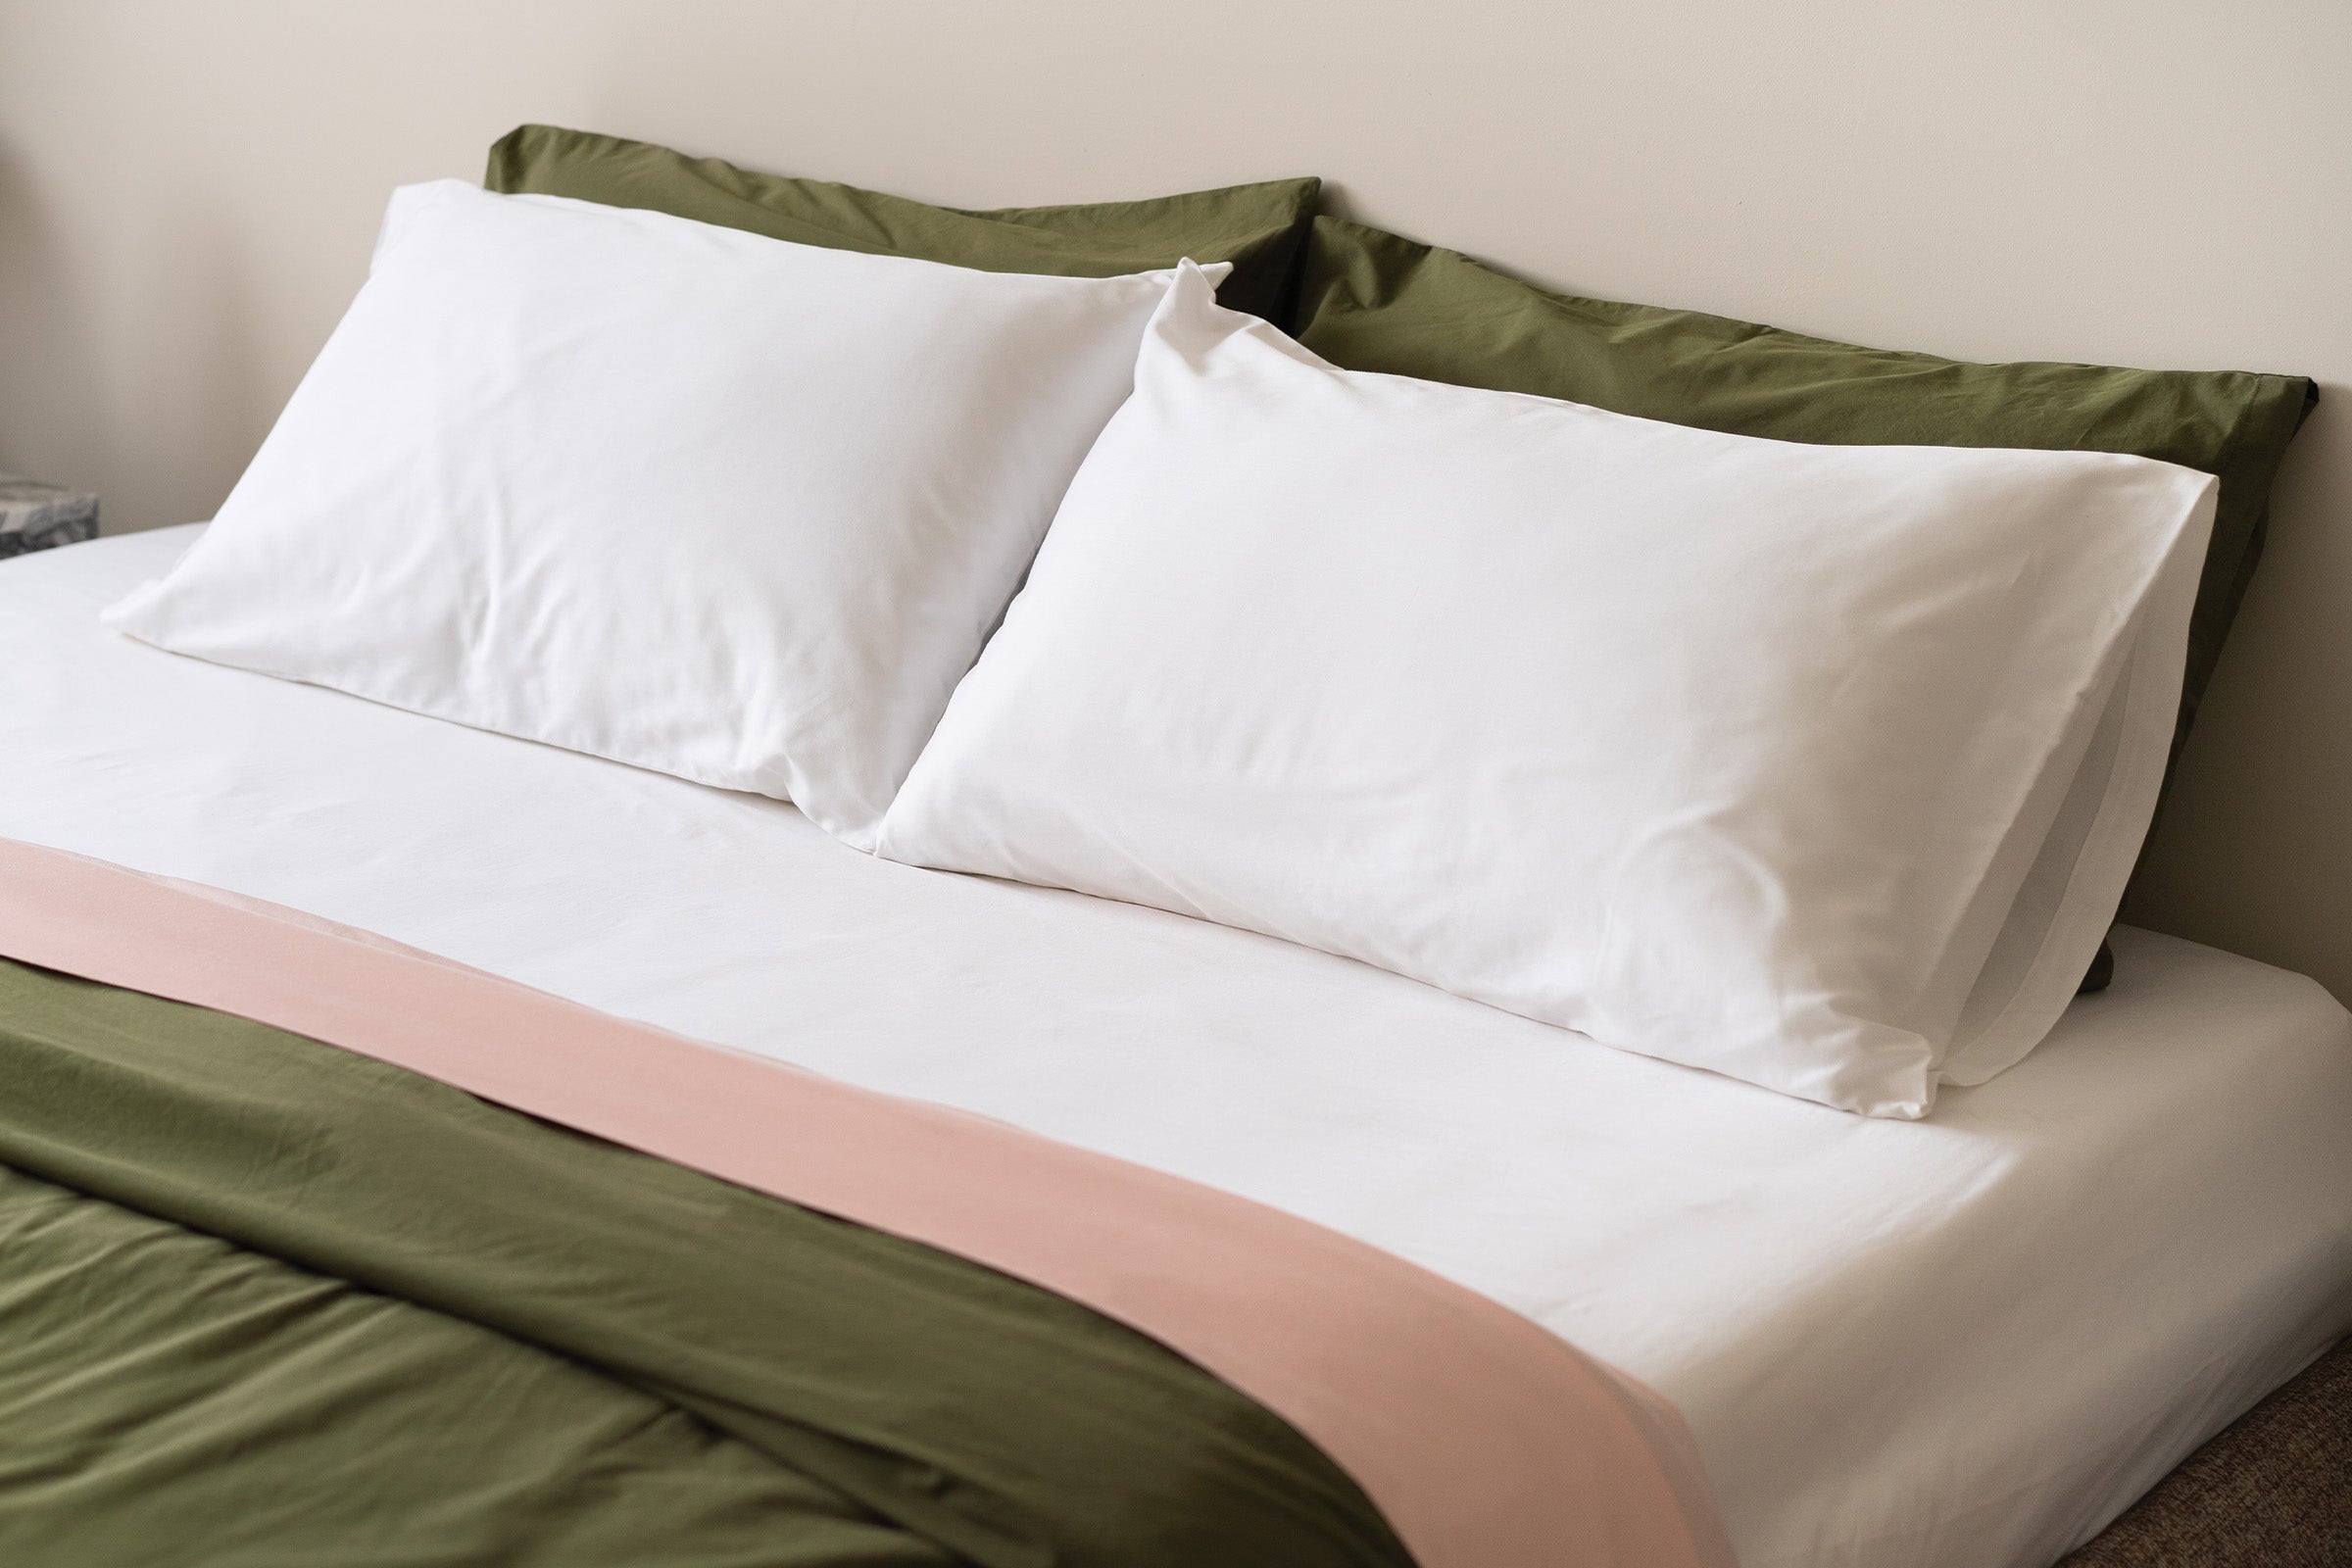 crisp-olive-duvet-cover-pillowcase-pair-white-fitted-sheet-pillowcase-pair-classic-blush-flat-sheet-by-sojao.jpg